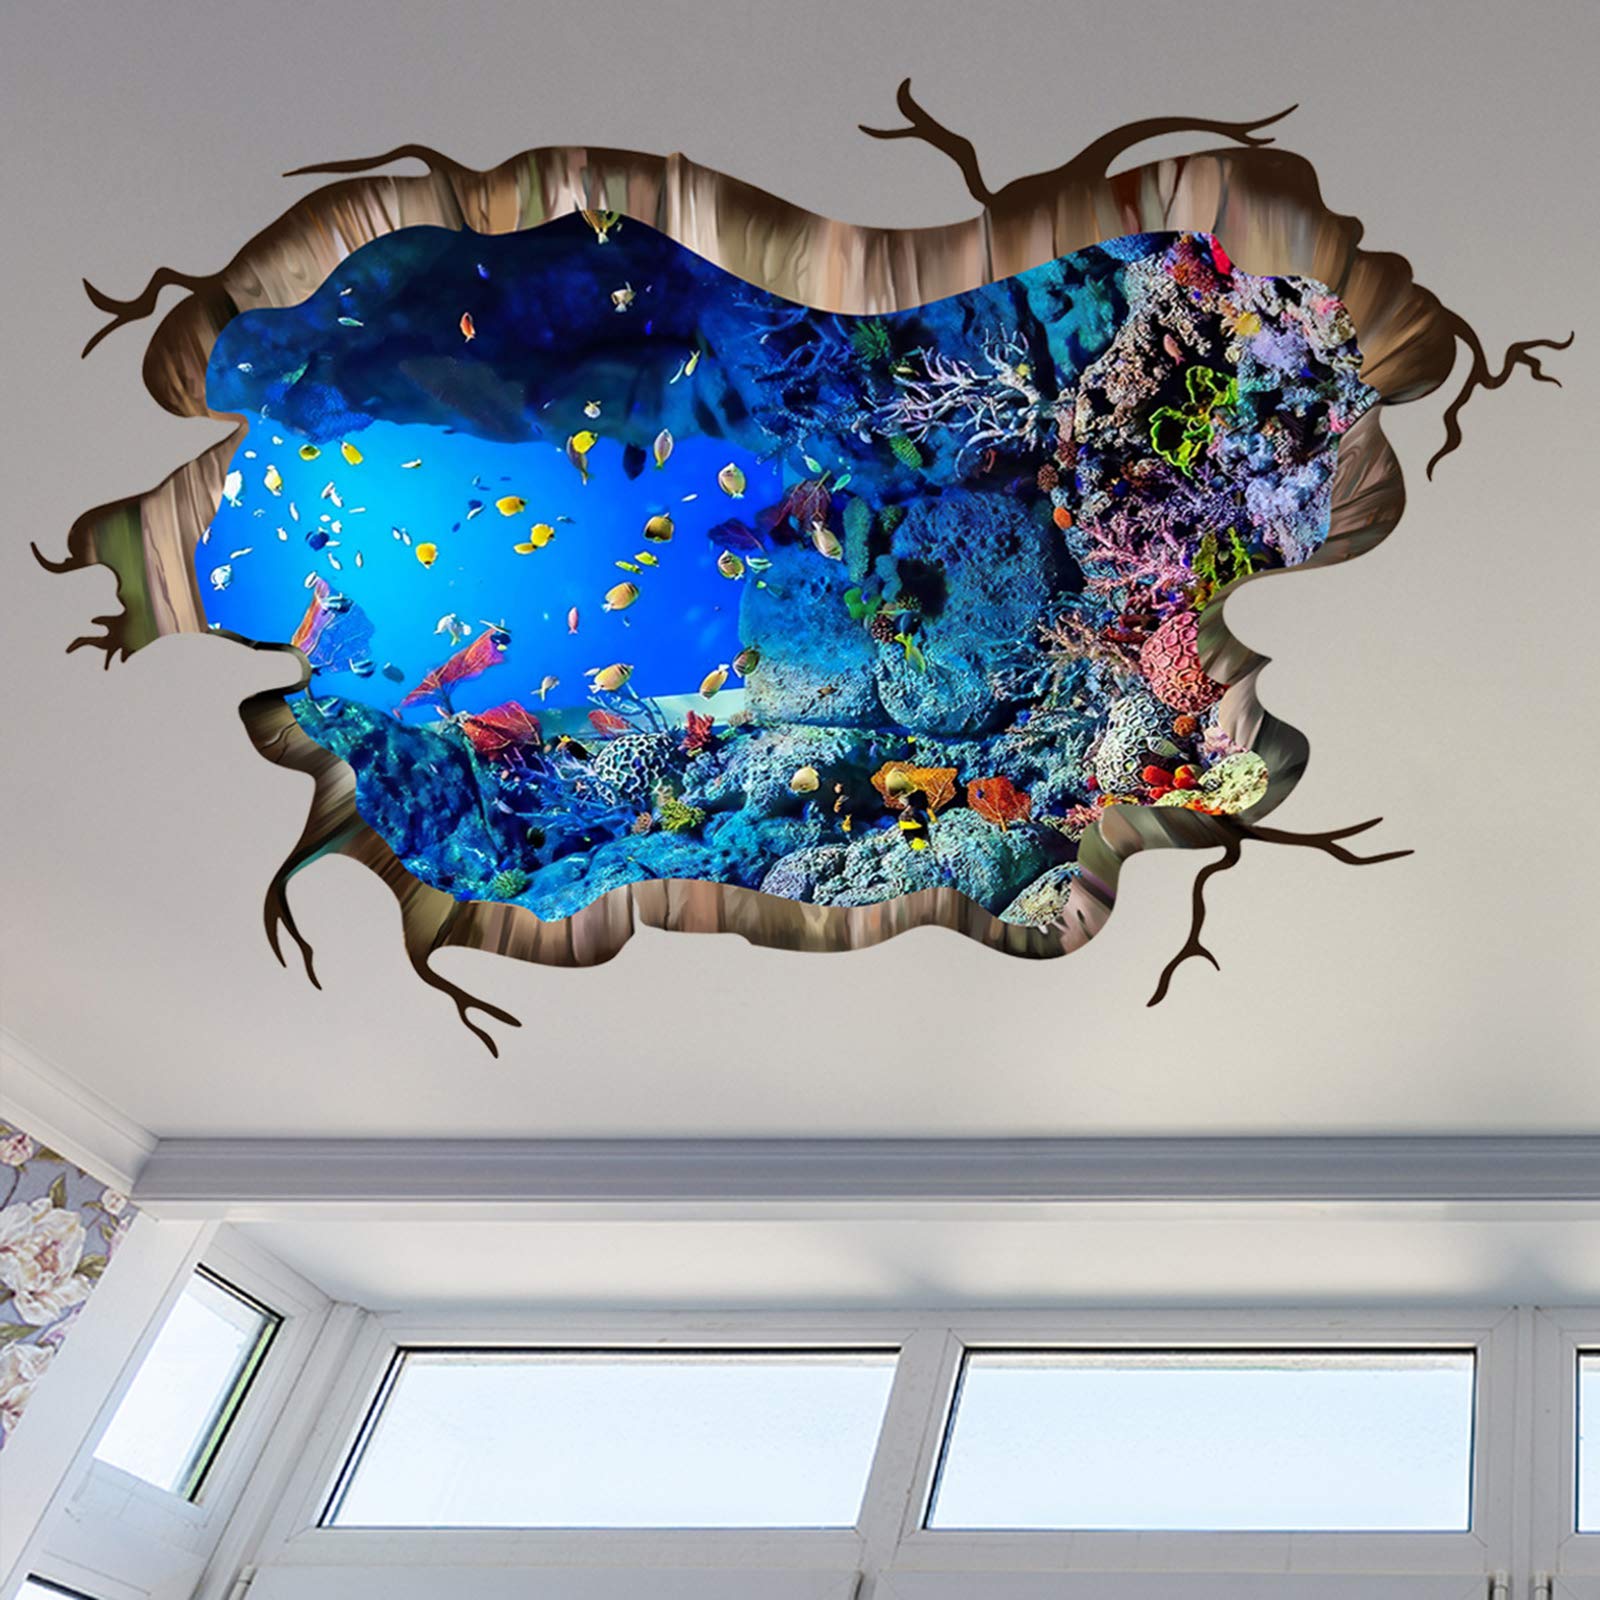 BOSUE SLLXG 3D Underwater World Wall Decal Home Floor Stickers Decor Vivid Fish Sea Turtle Broken Animals Art Wall Decal Under The Sea Bathroom Bedroom Decor Floor Sticker Nursery -80*120cm